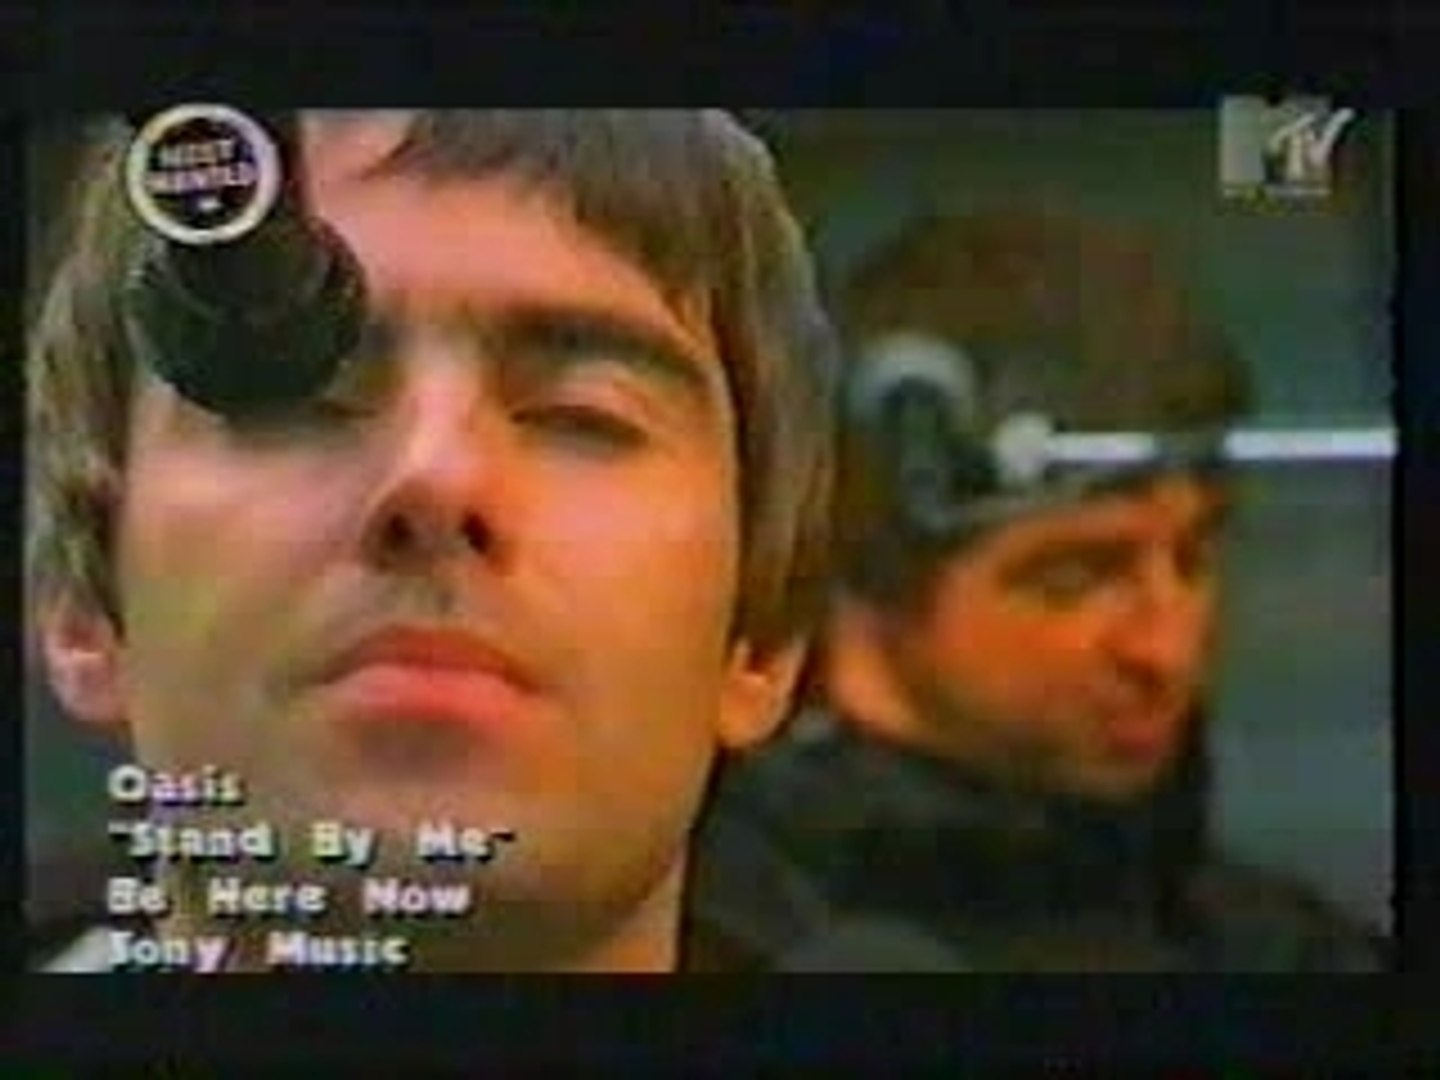 Oasis adult video